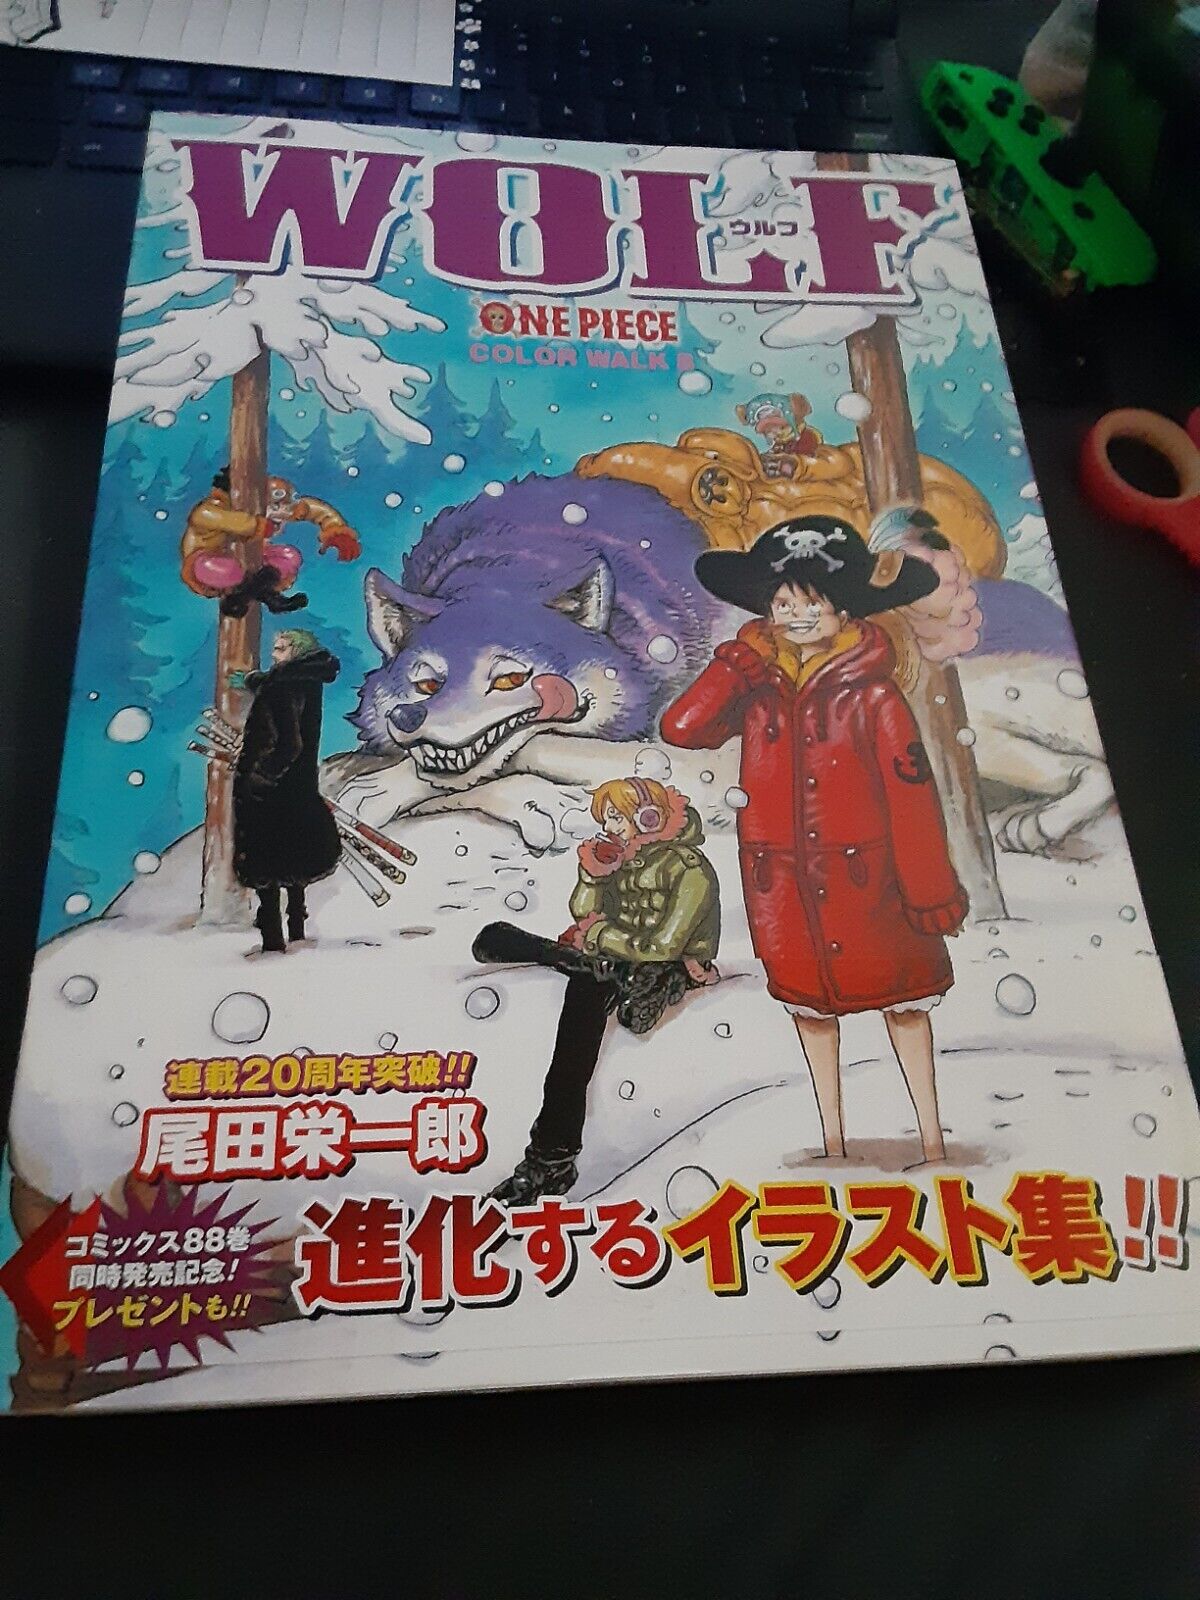 Wolf/ ONE PIECE Eiichiro Oda Illustration / Color Walk 8 / Japanese Art Book